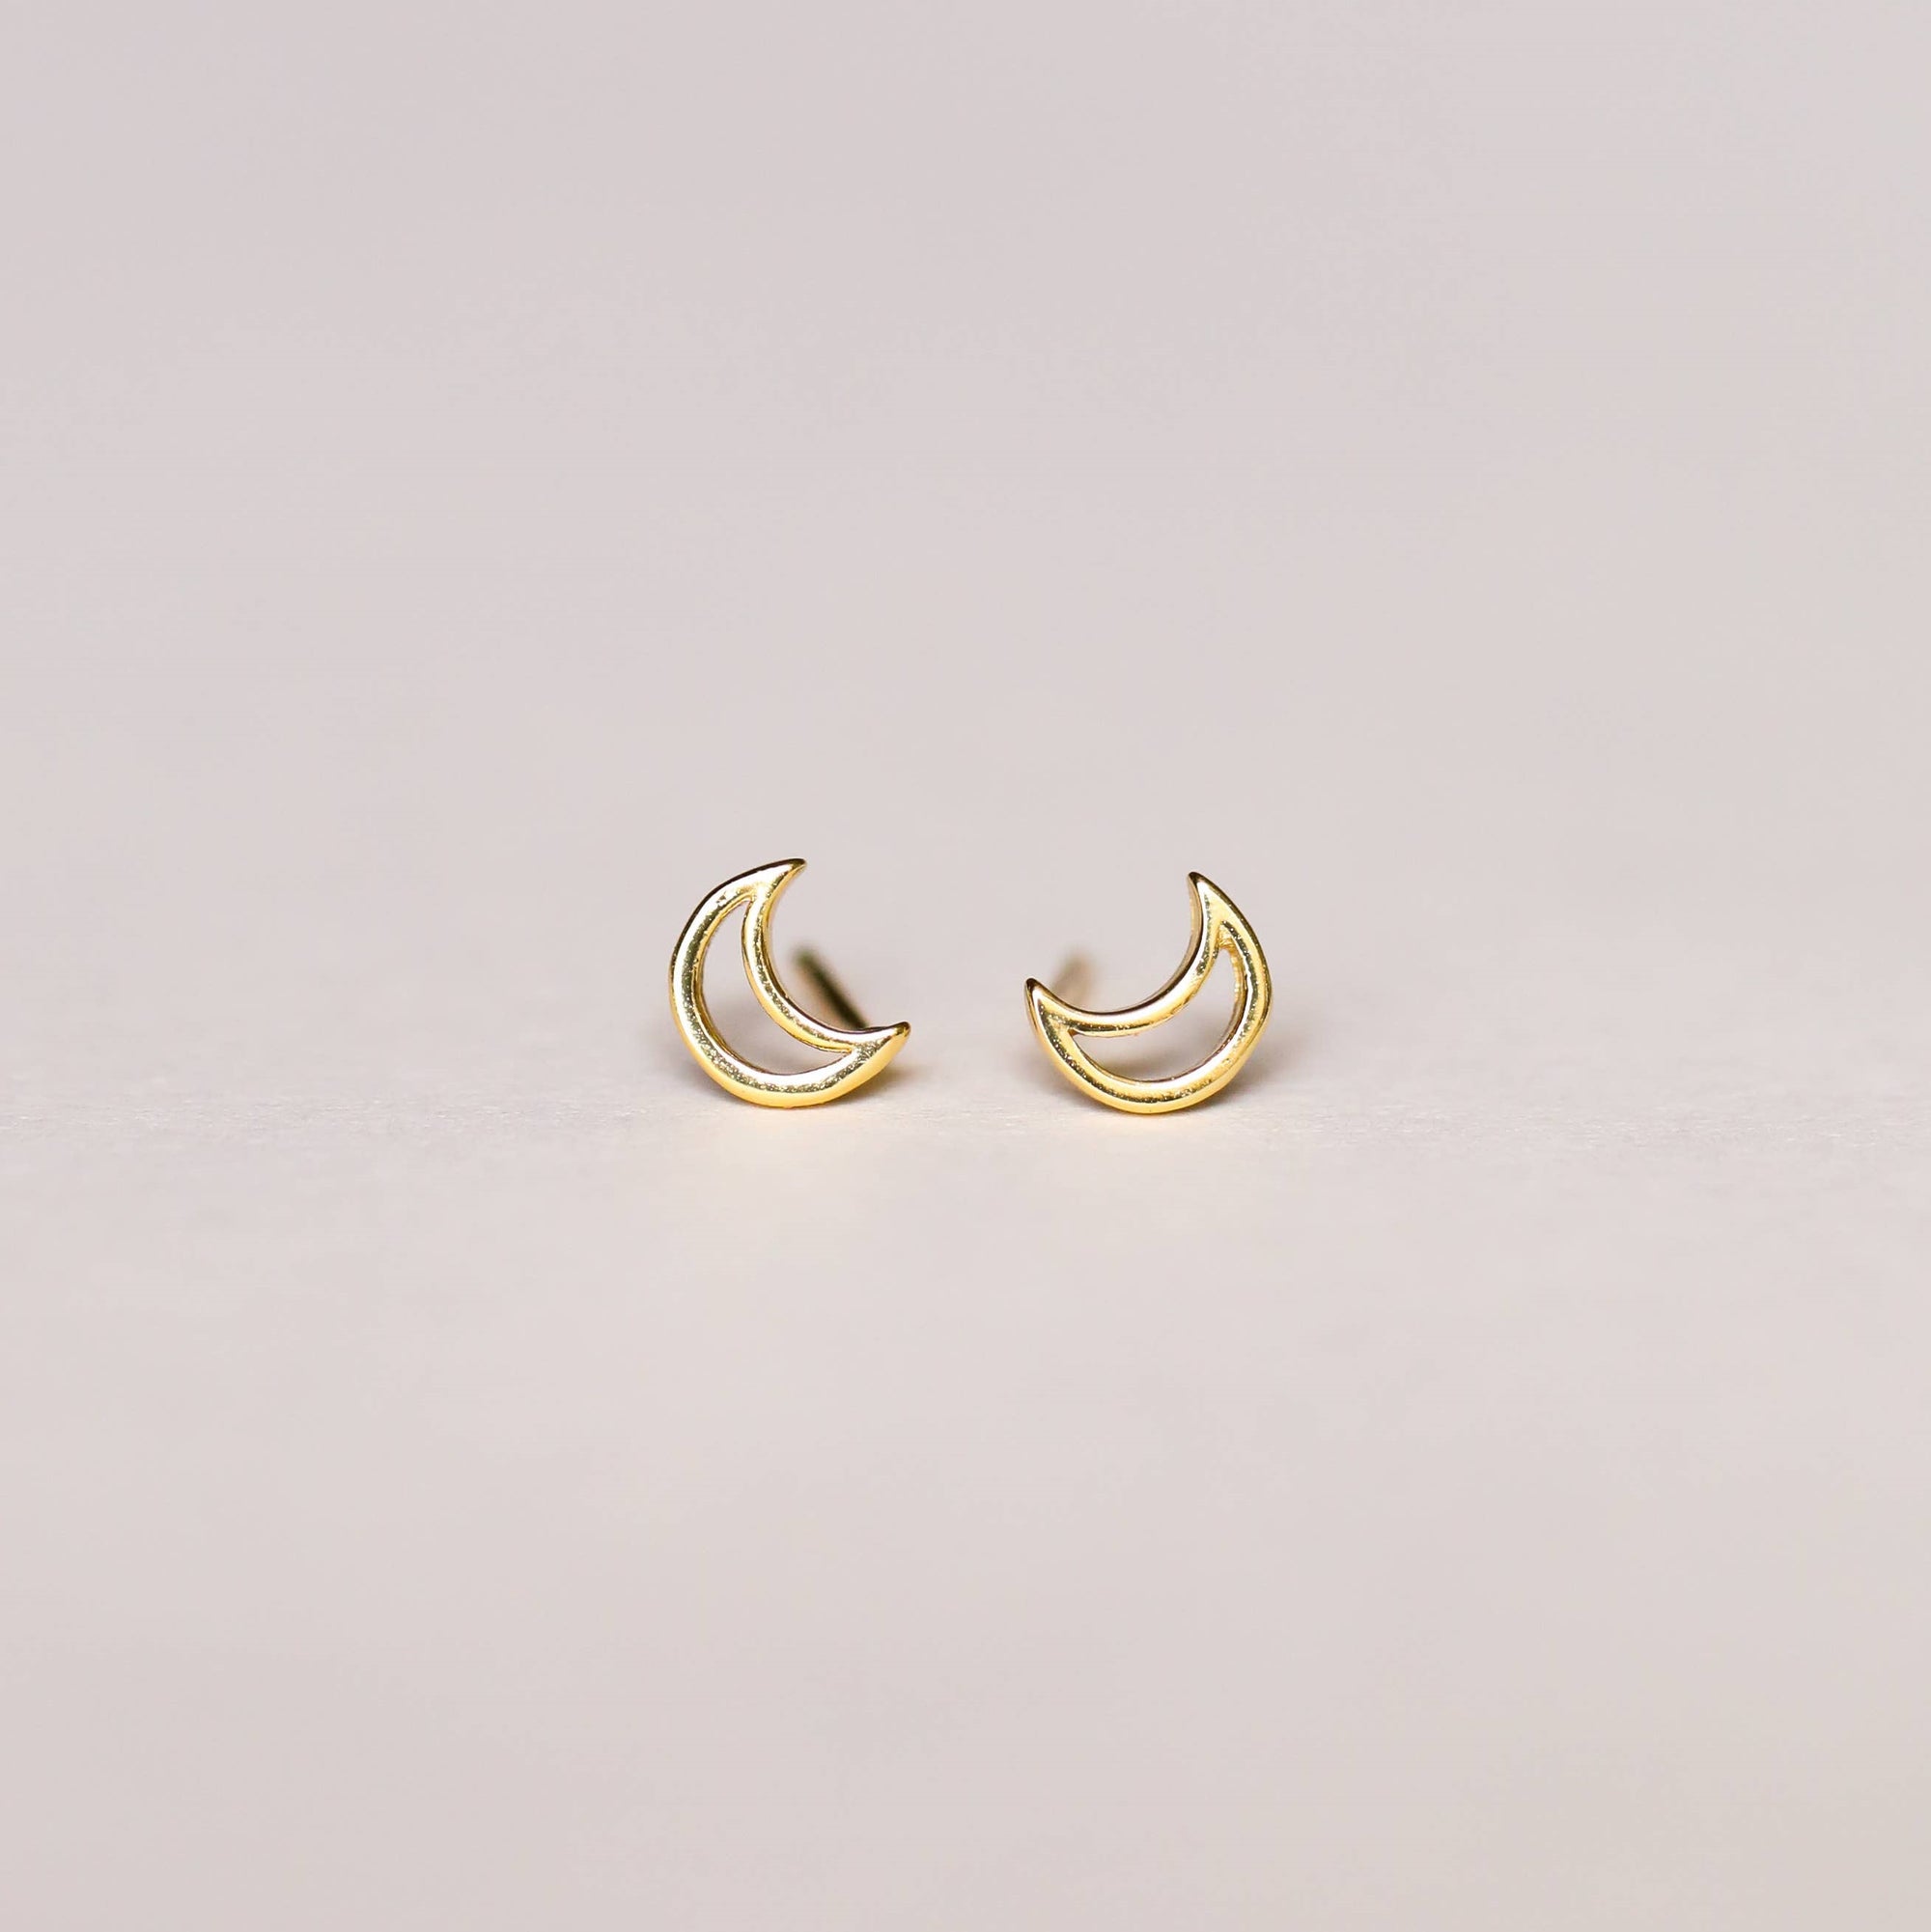 The Minimalist Moon Stud Earrings by JaxKelly